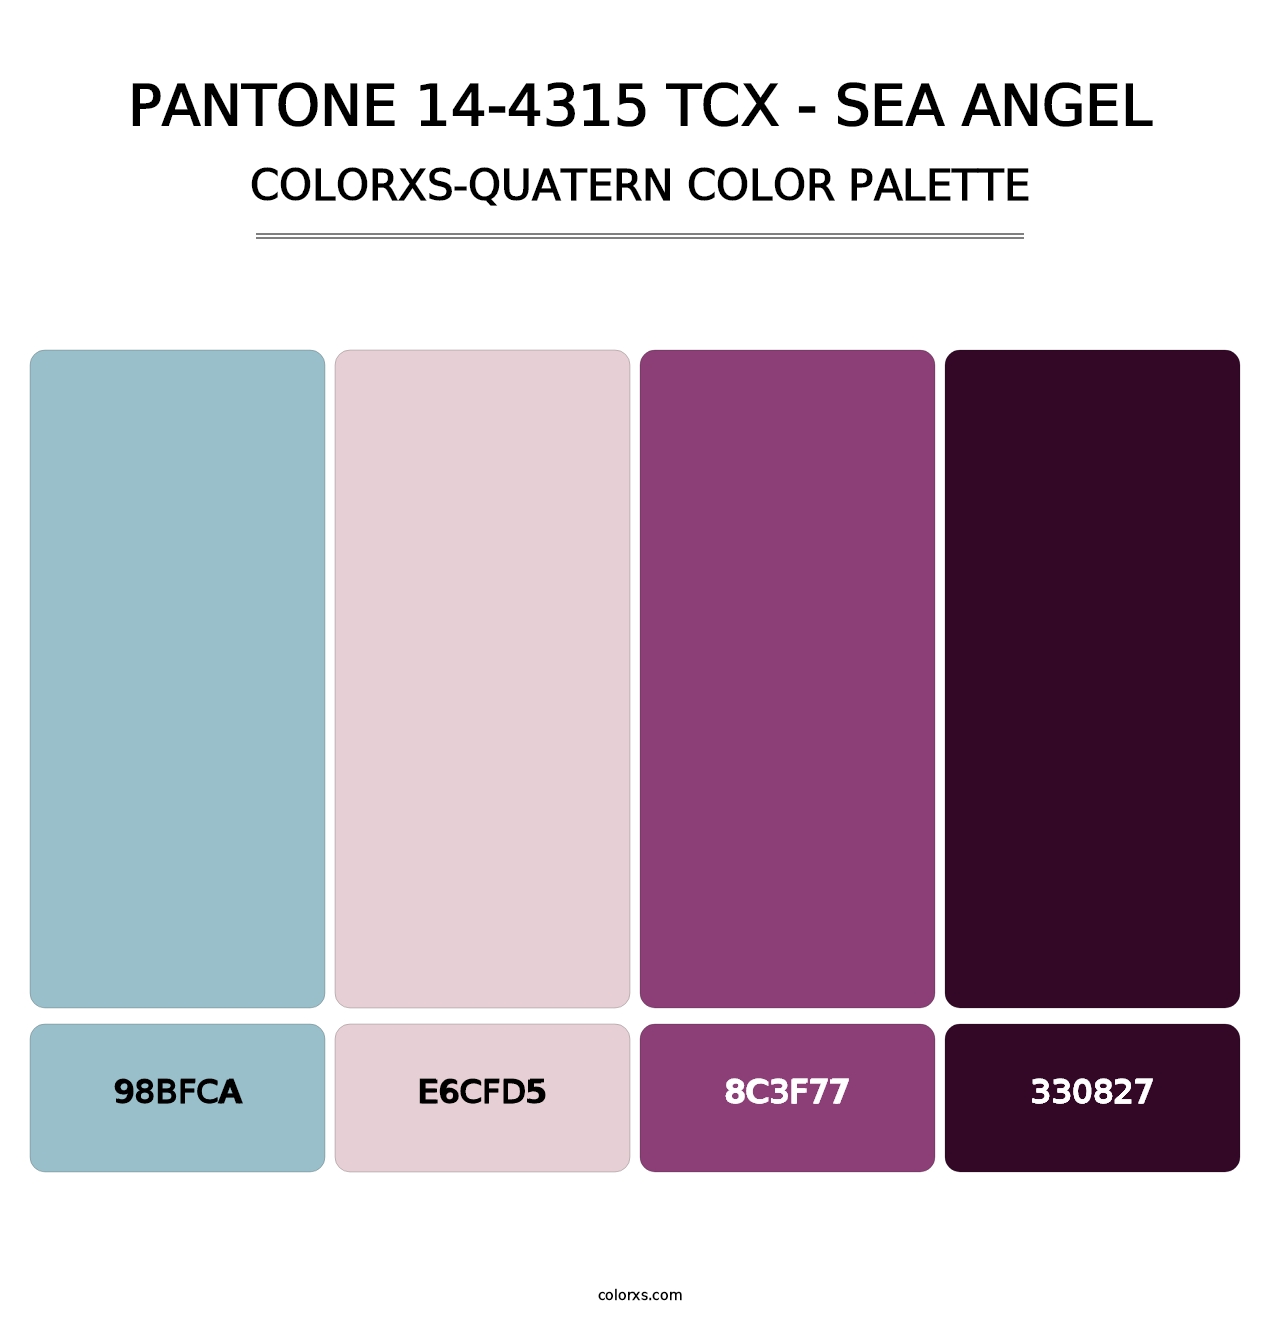 PANTONE 14-4315 TCX - Sea Angel - Colorxs Quatern Palette